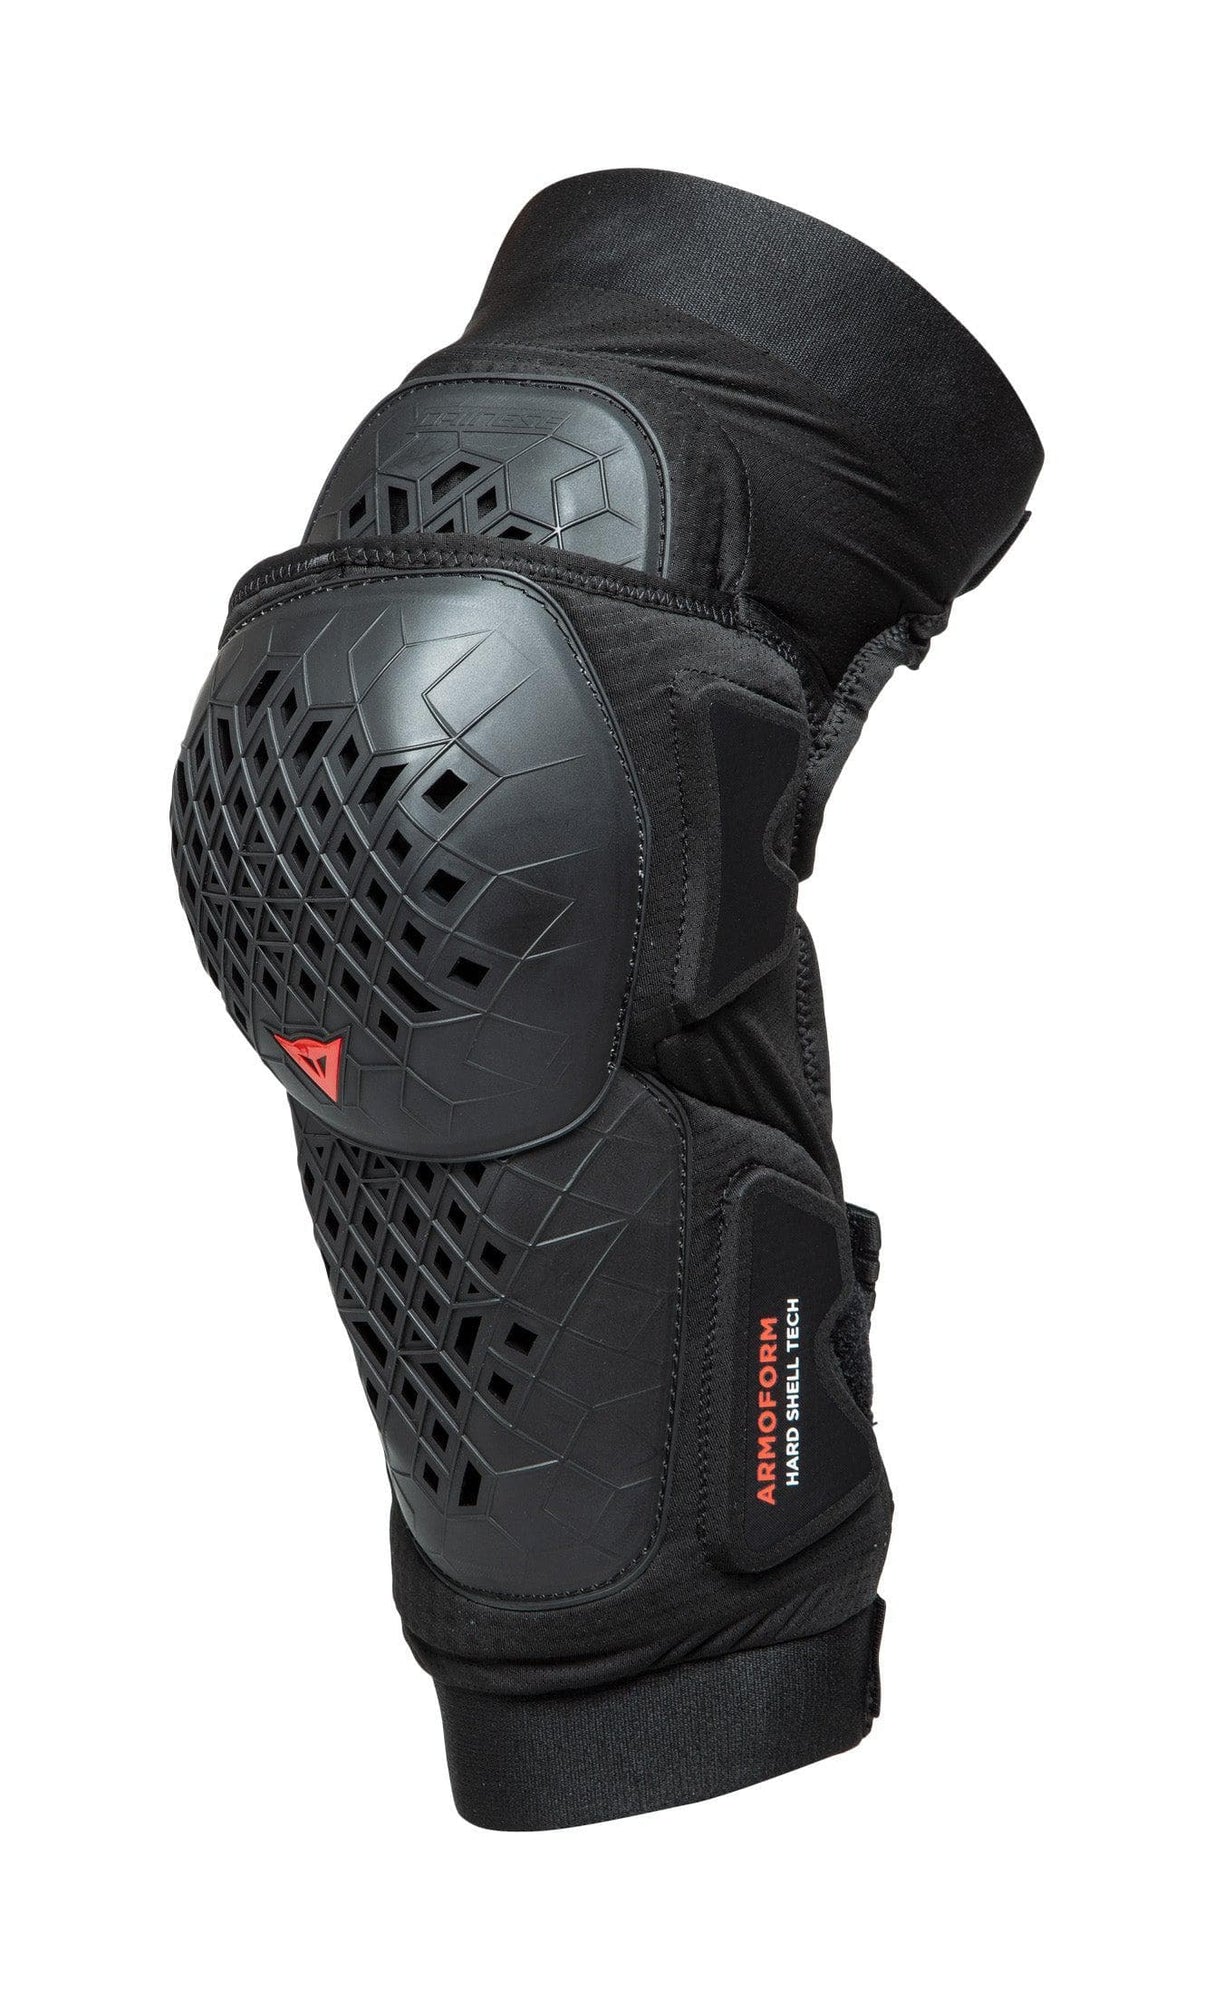 Dainese Armoform Pro Knee Guard (Black, L)